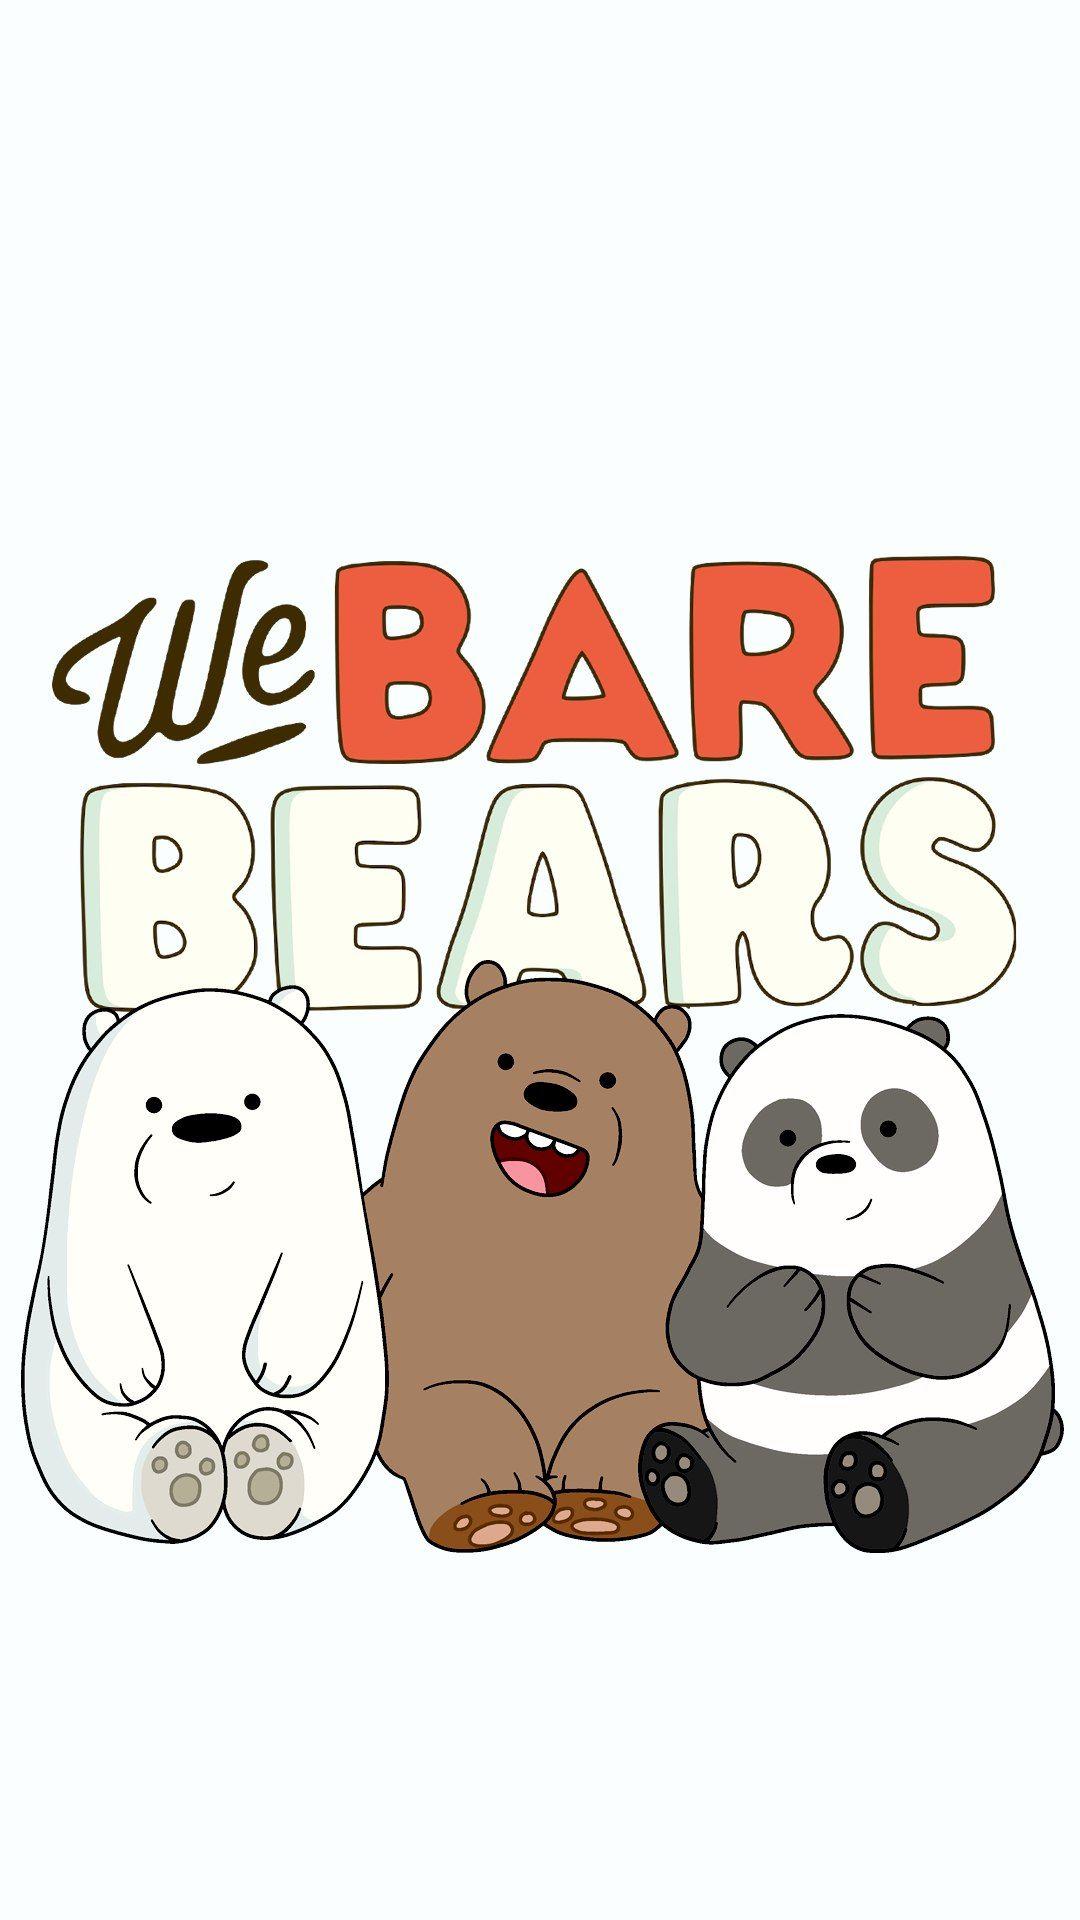 We bare bears, illustration, cute, art. illustration / art